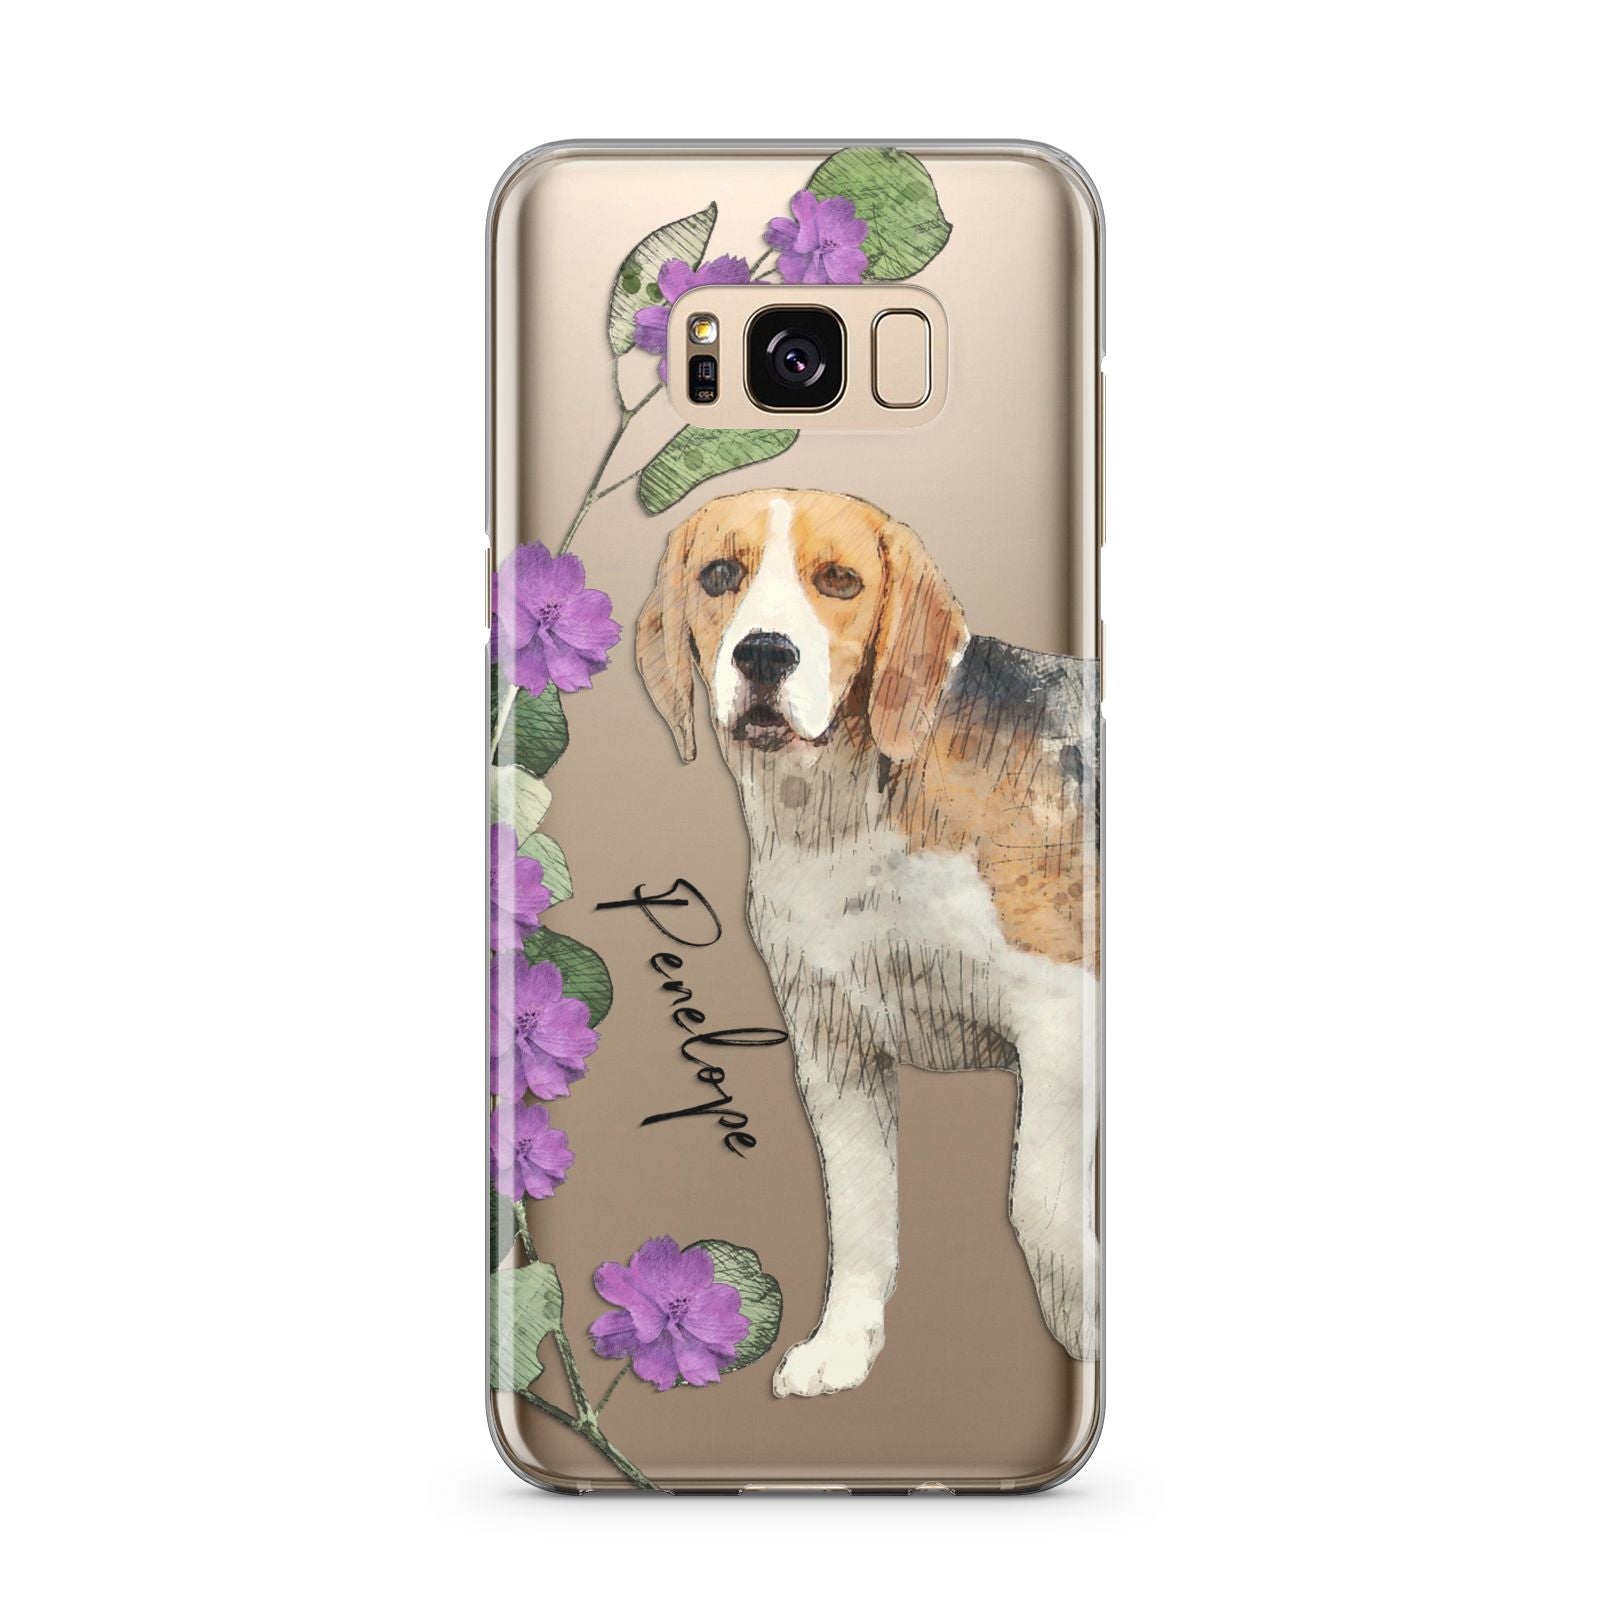 Personalised Dog Samsung Galaxy S8 Plus Case